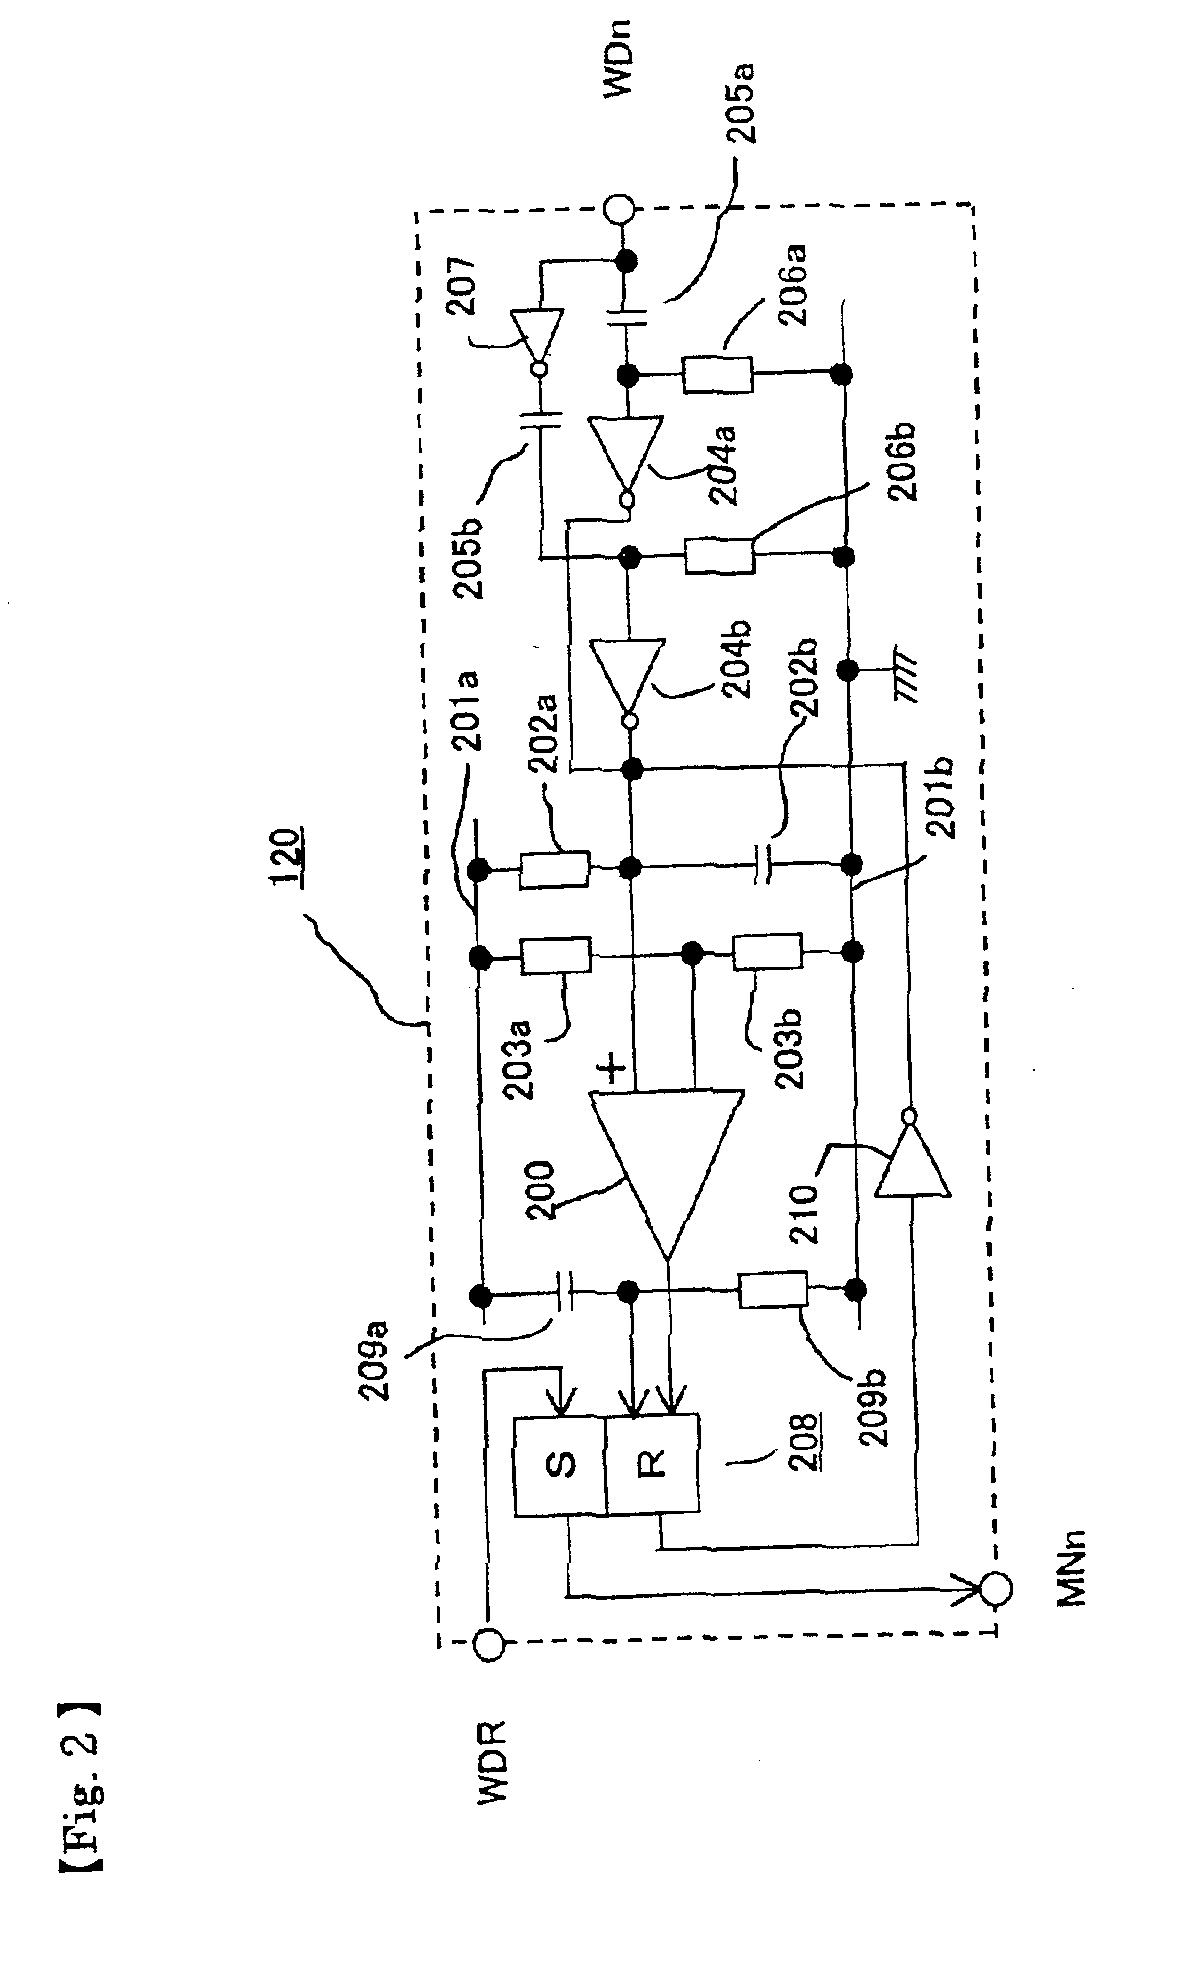 Microprocessor runaway monitoring control circuit